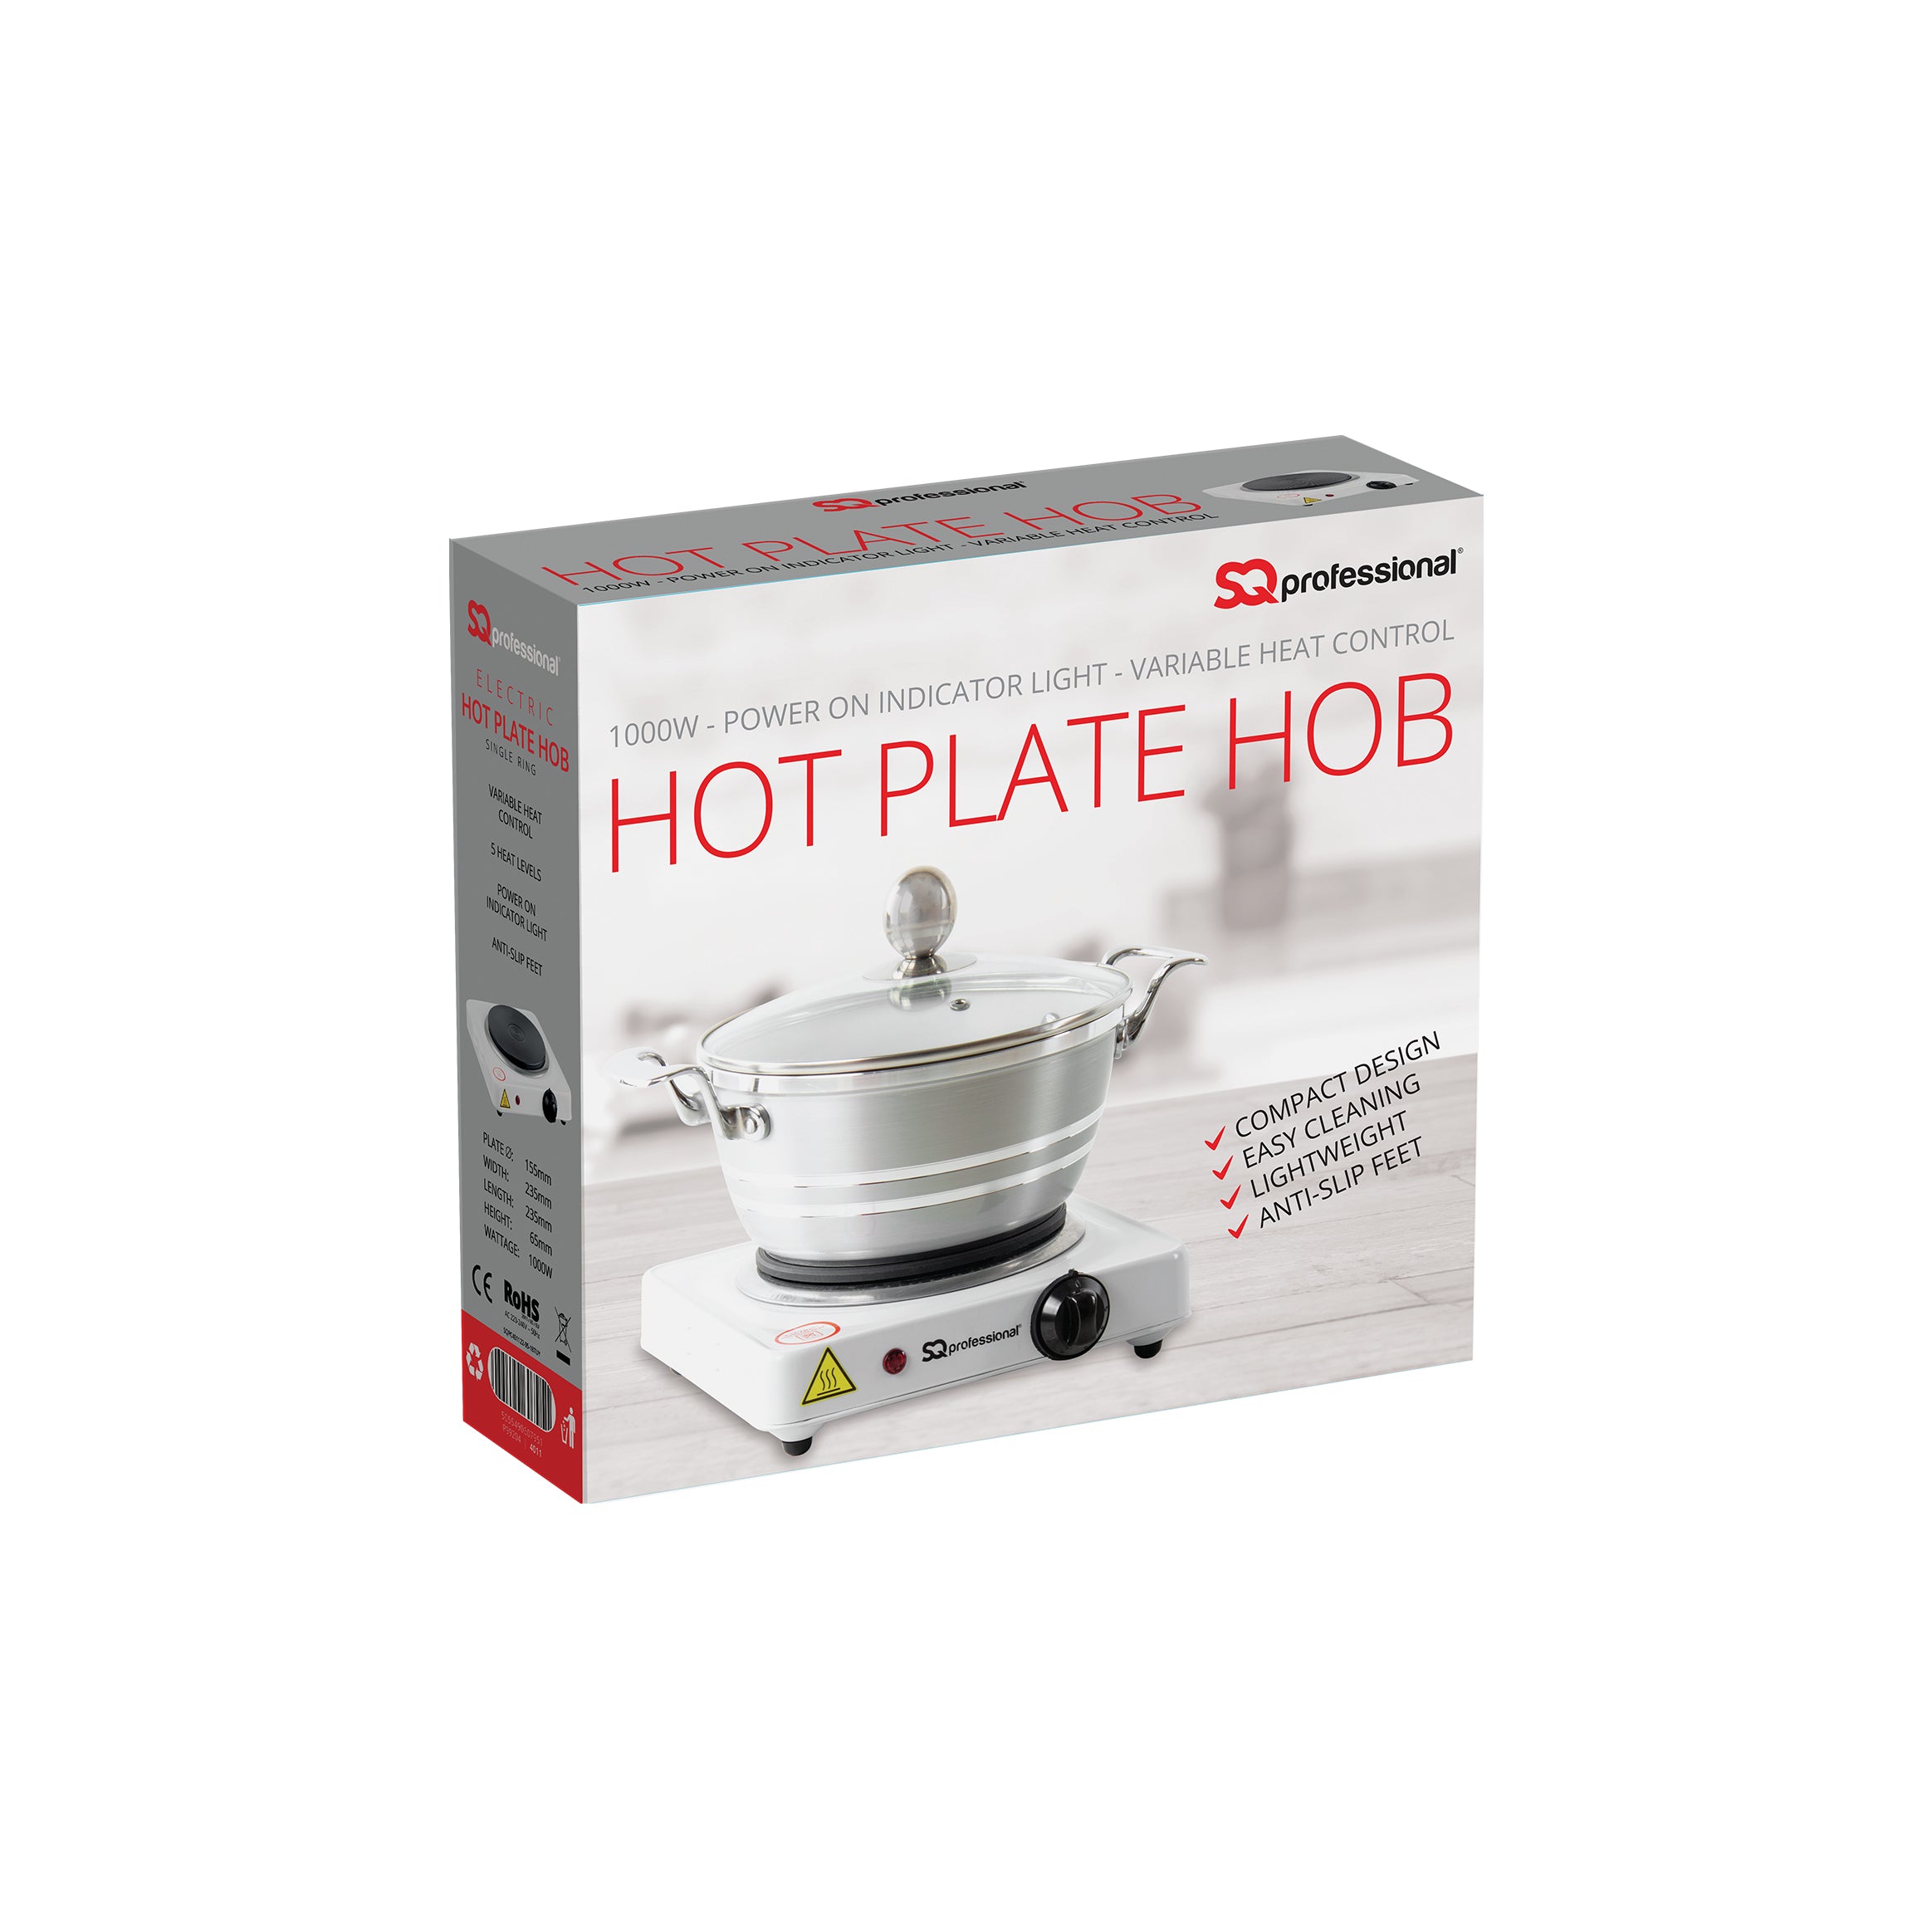 Electric Hot Plate Hob - SINGLE